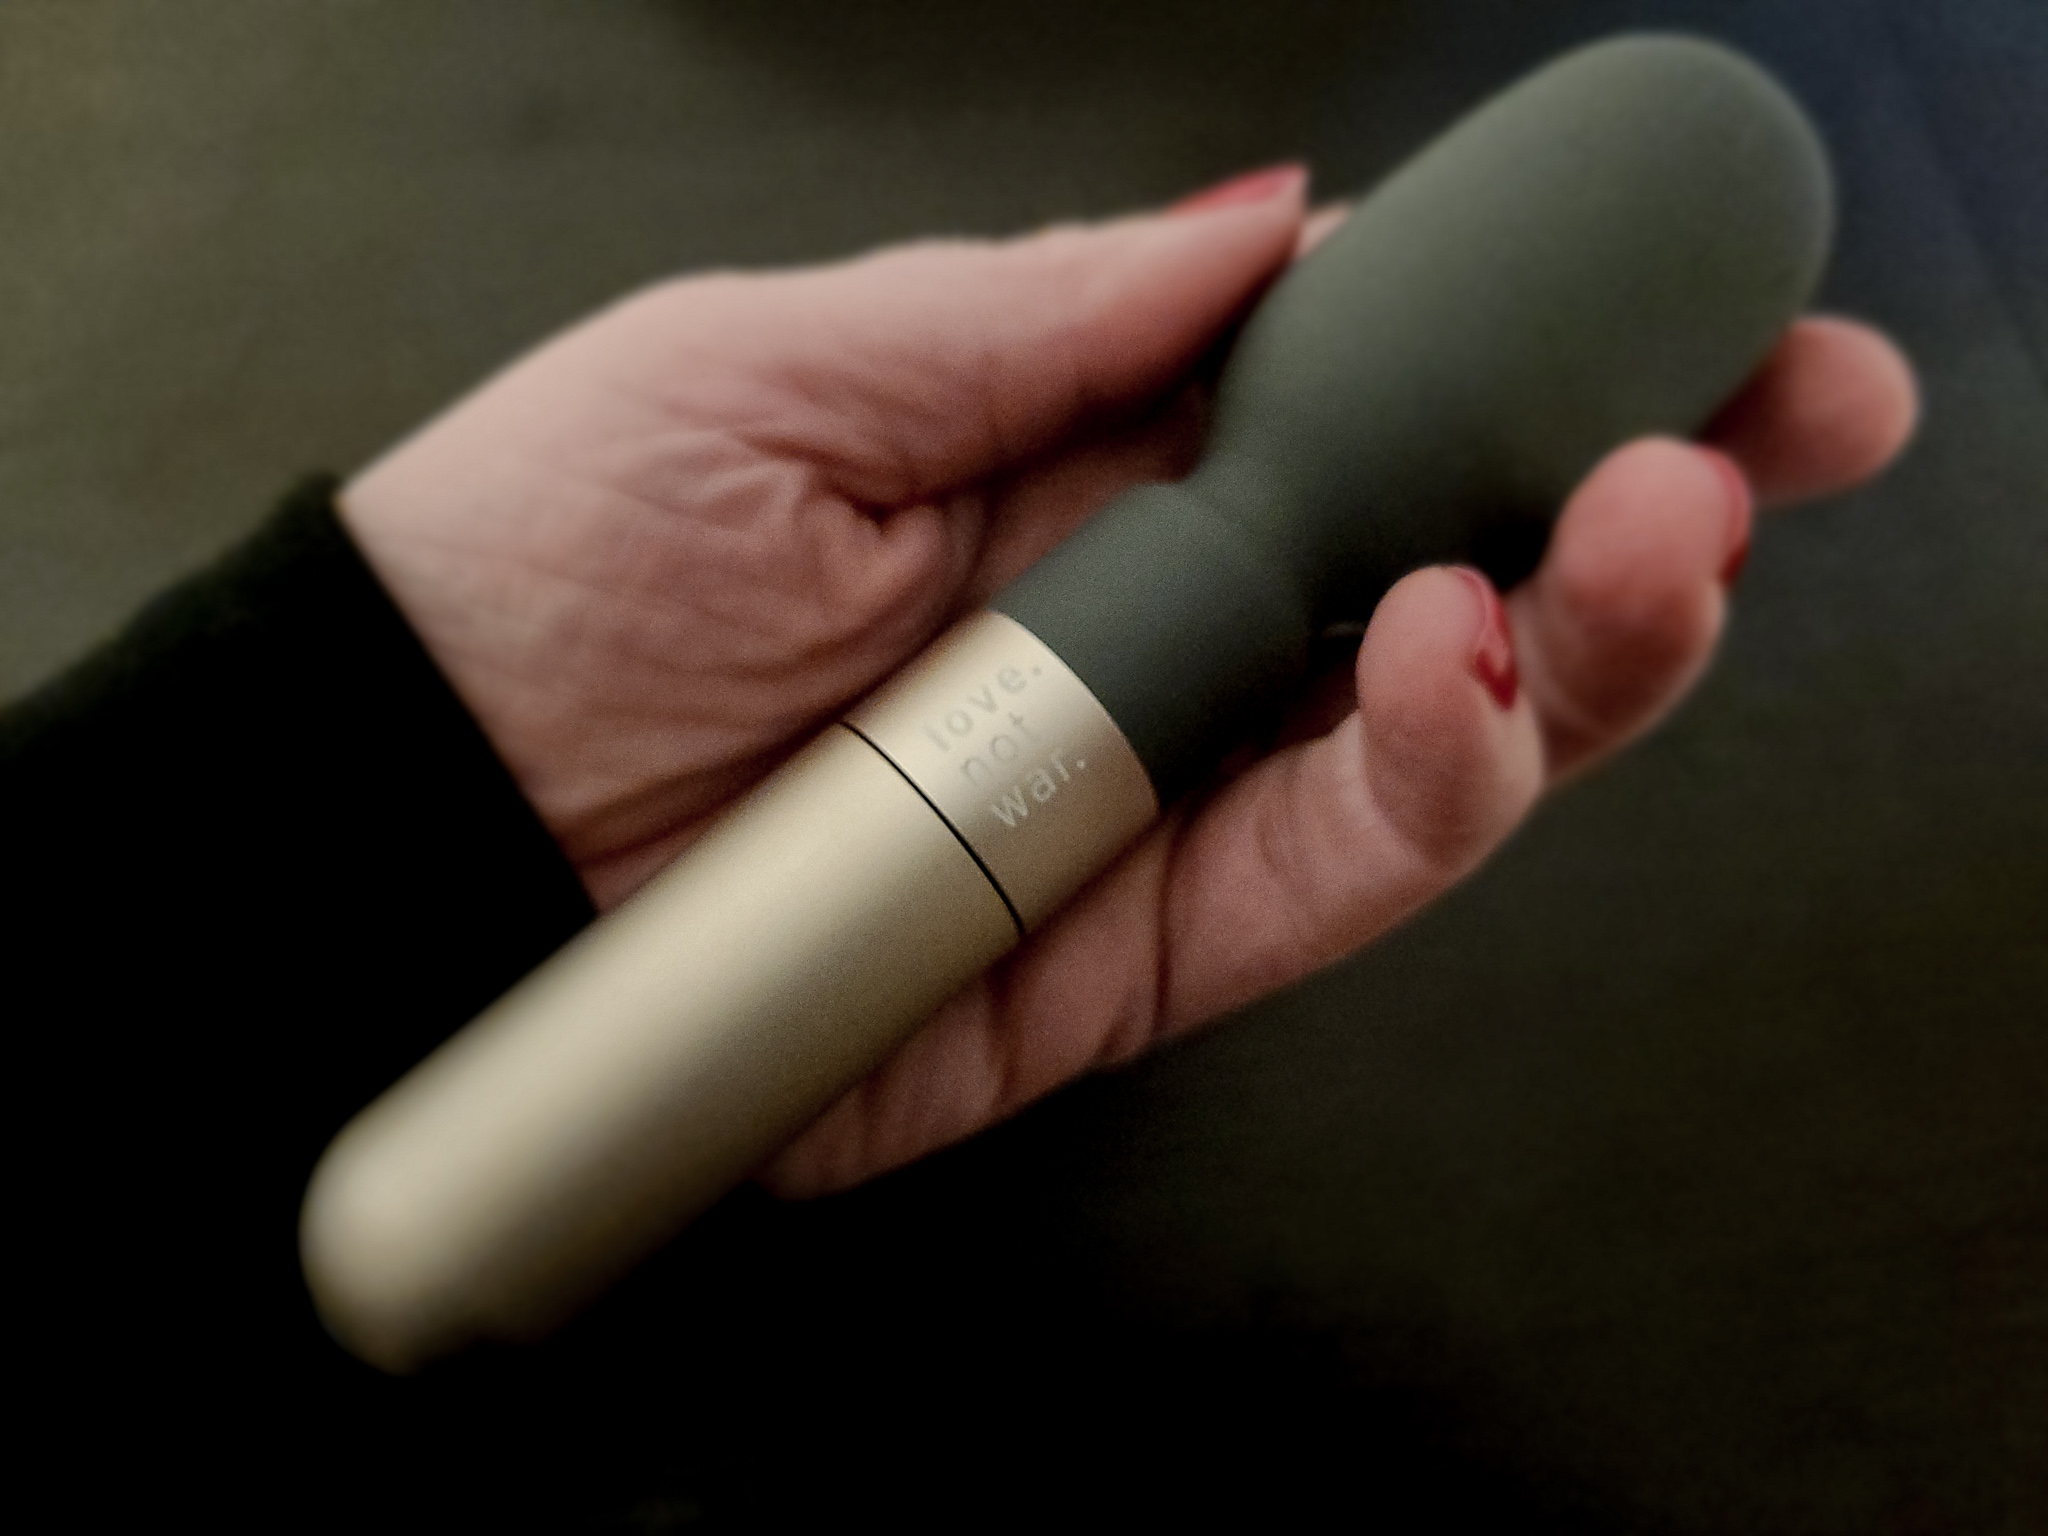 The Koi wand vibrator